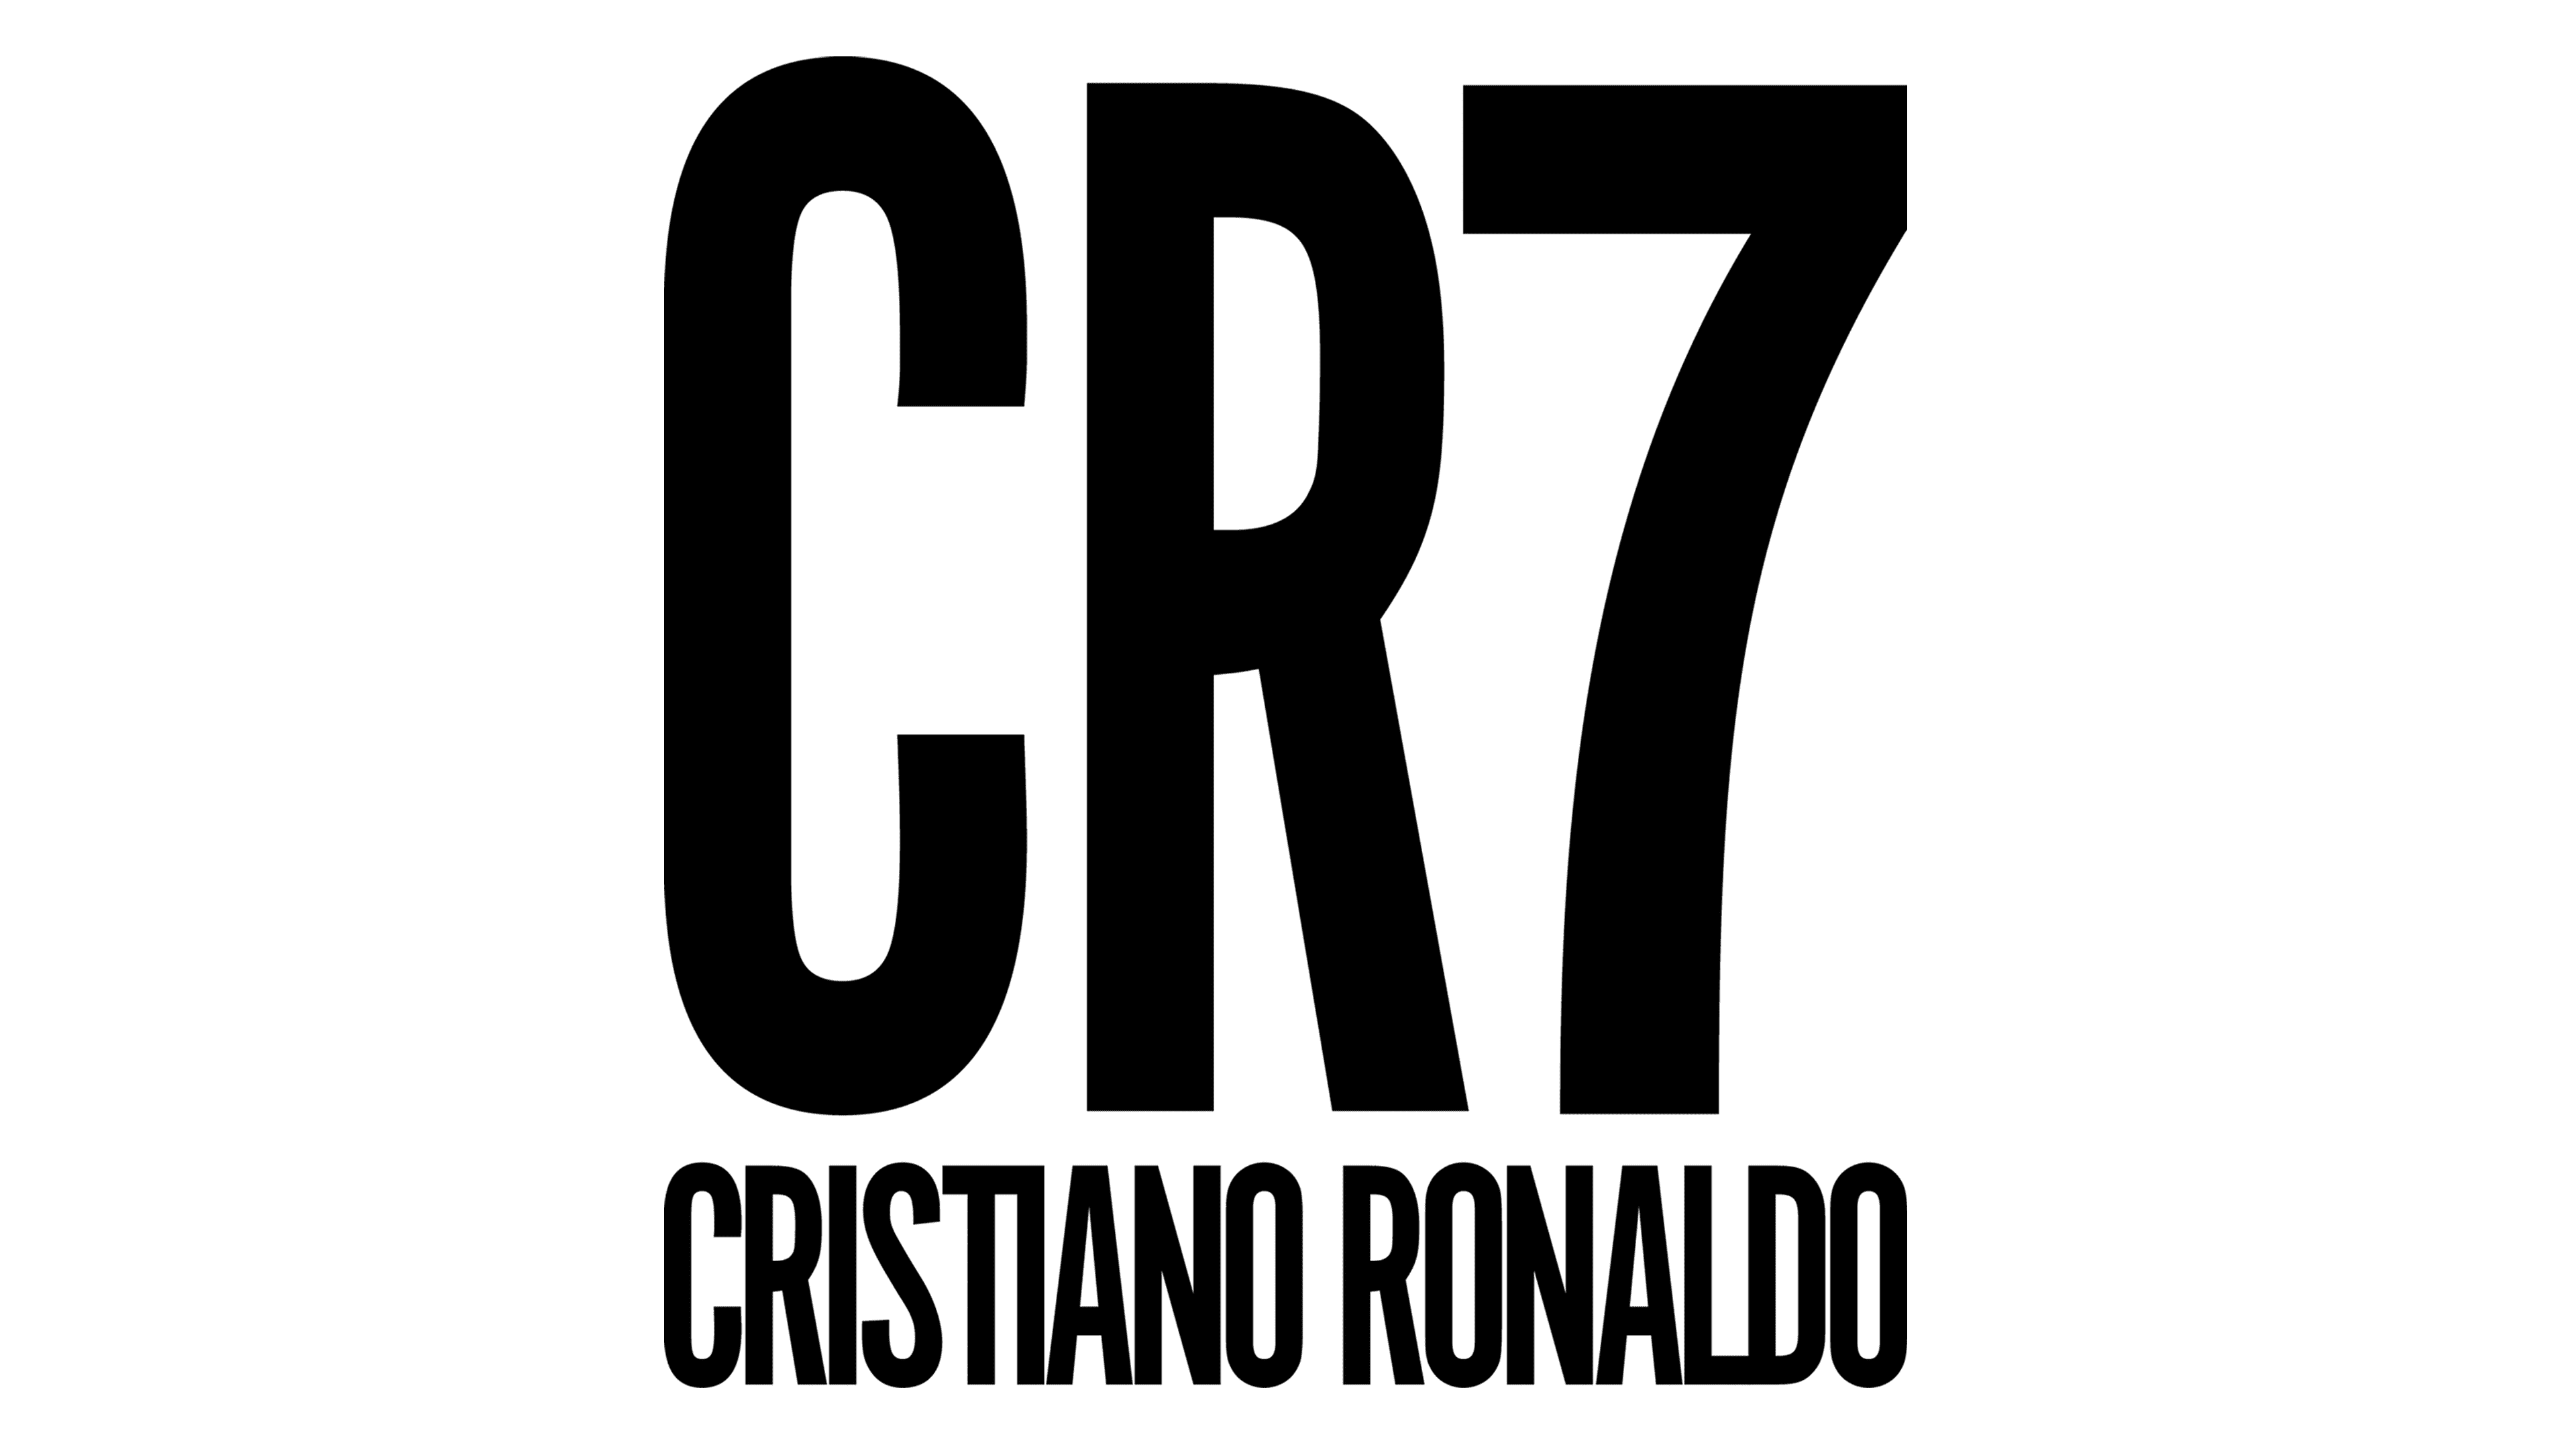 Details more than 223 cr7 logo